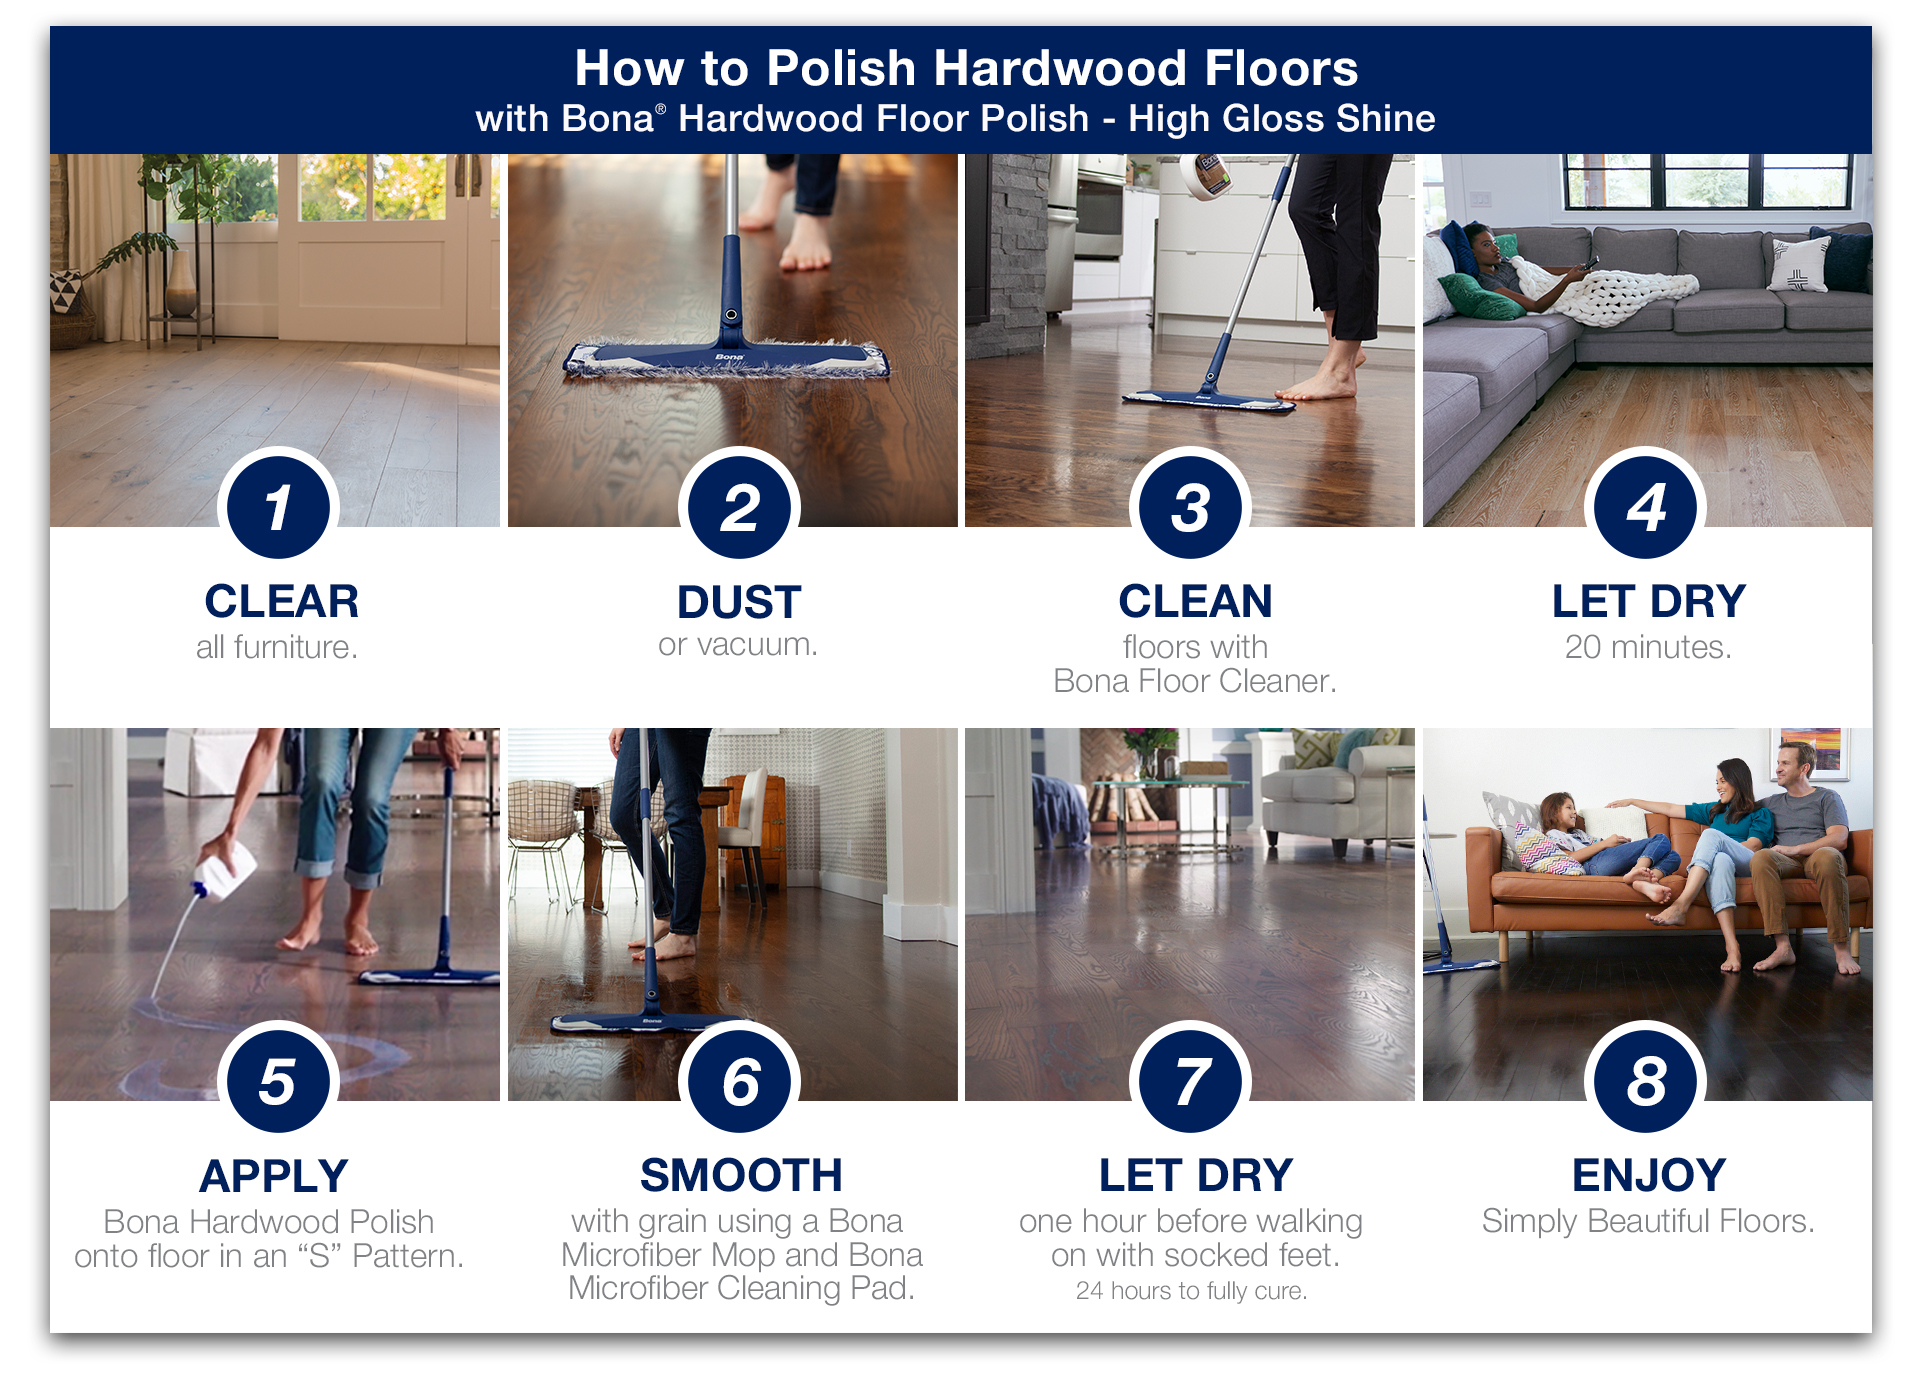 Bona Hardwood Floor Polish High, How To Use Bona On Hardwood Floors